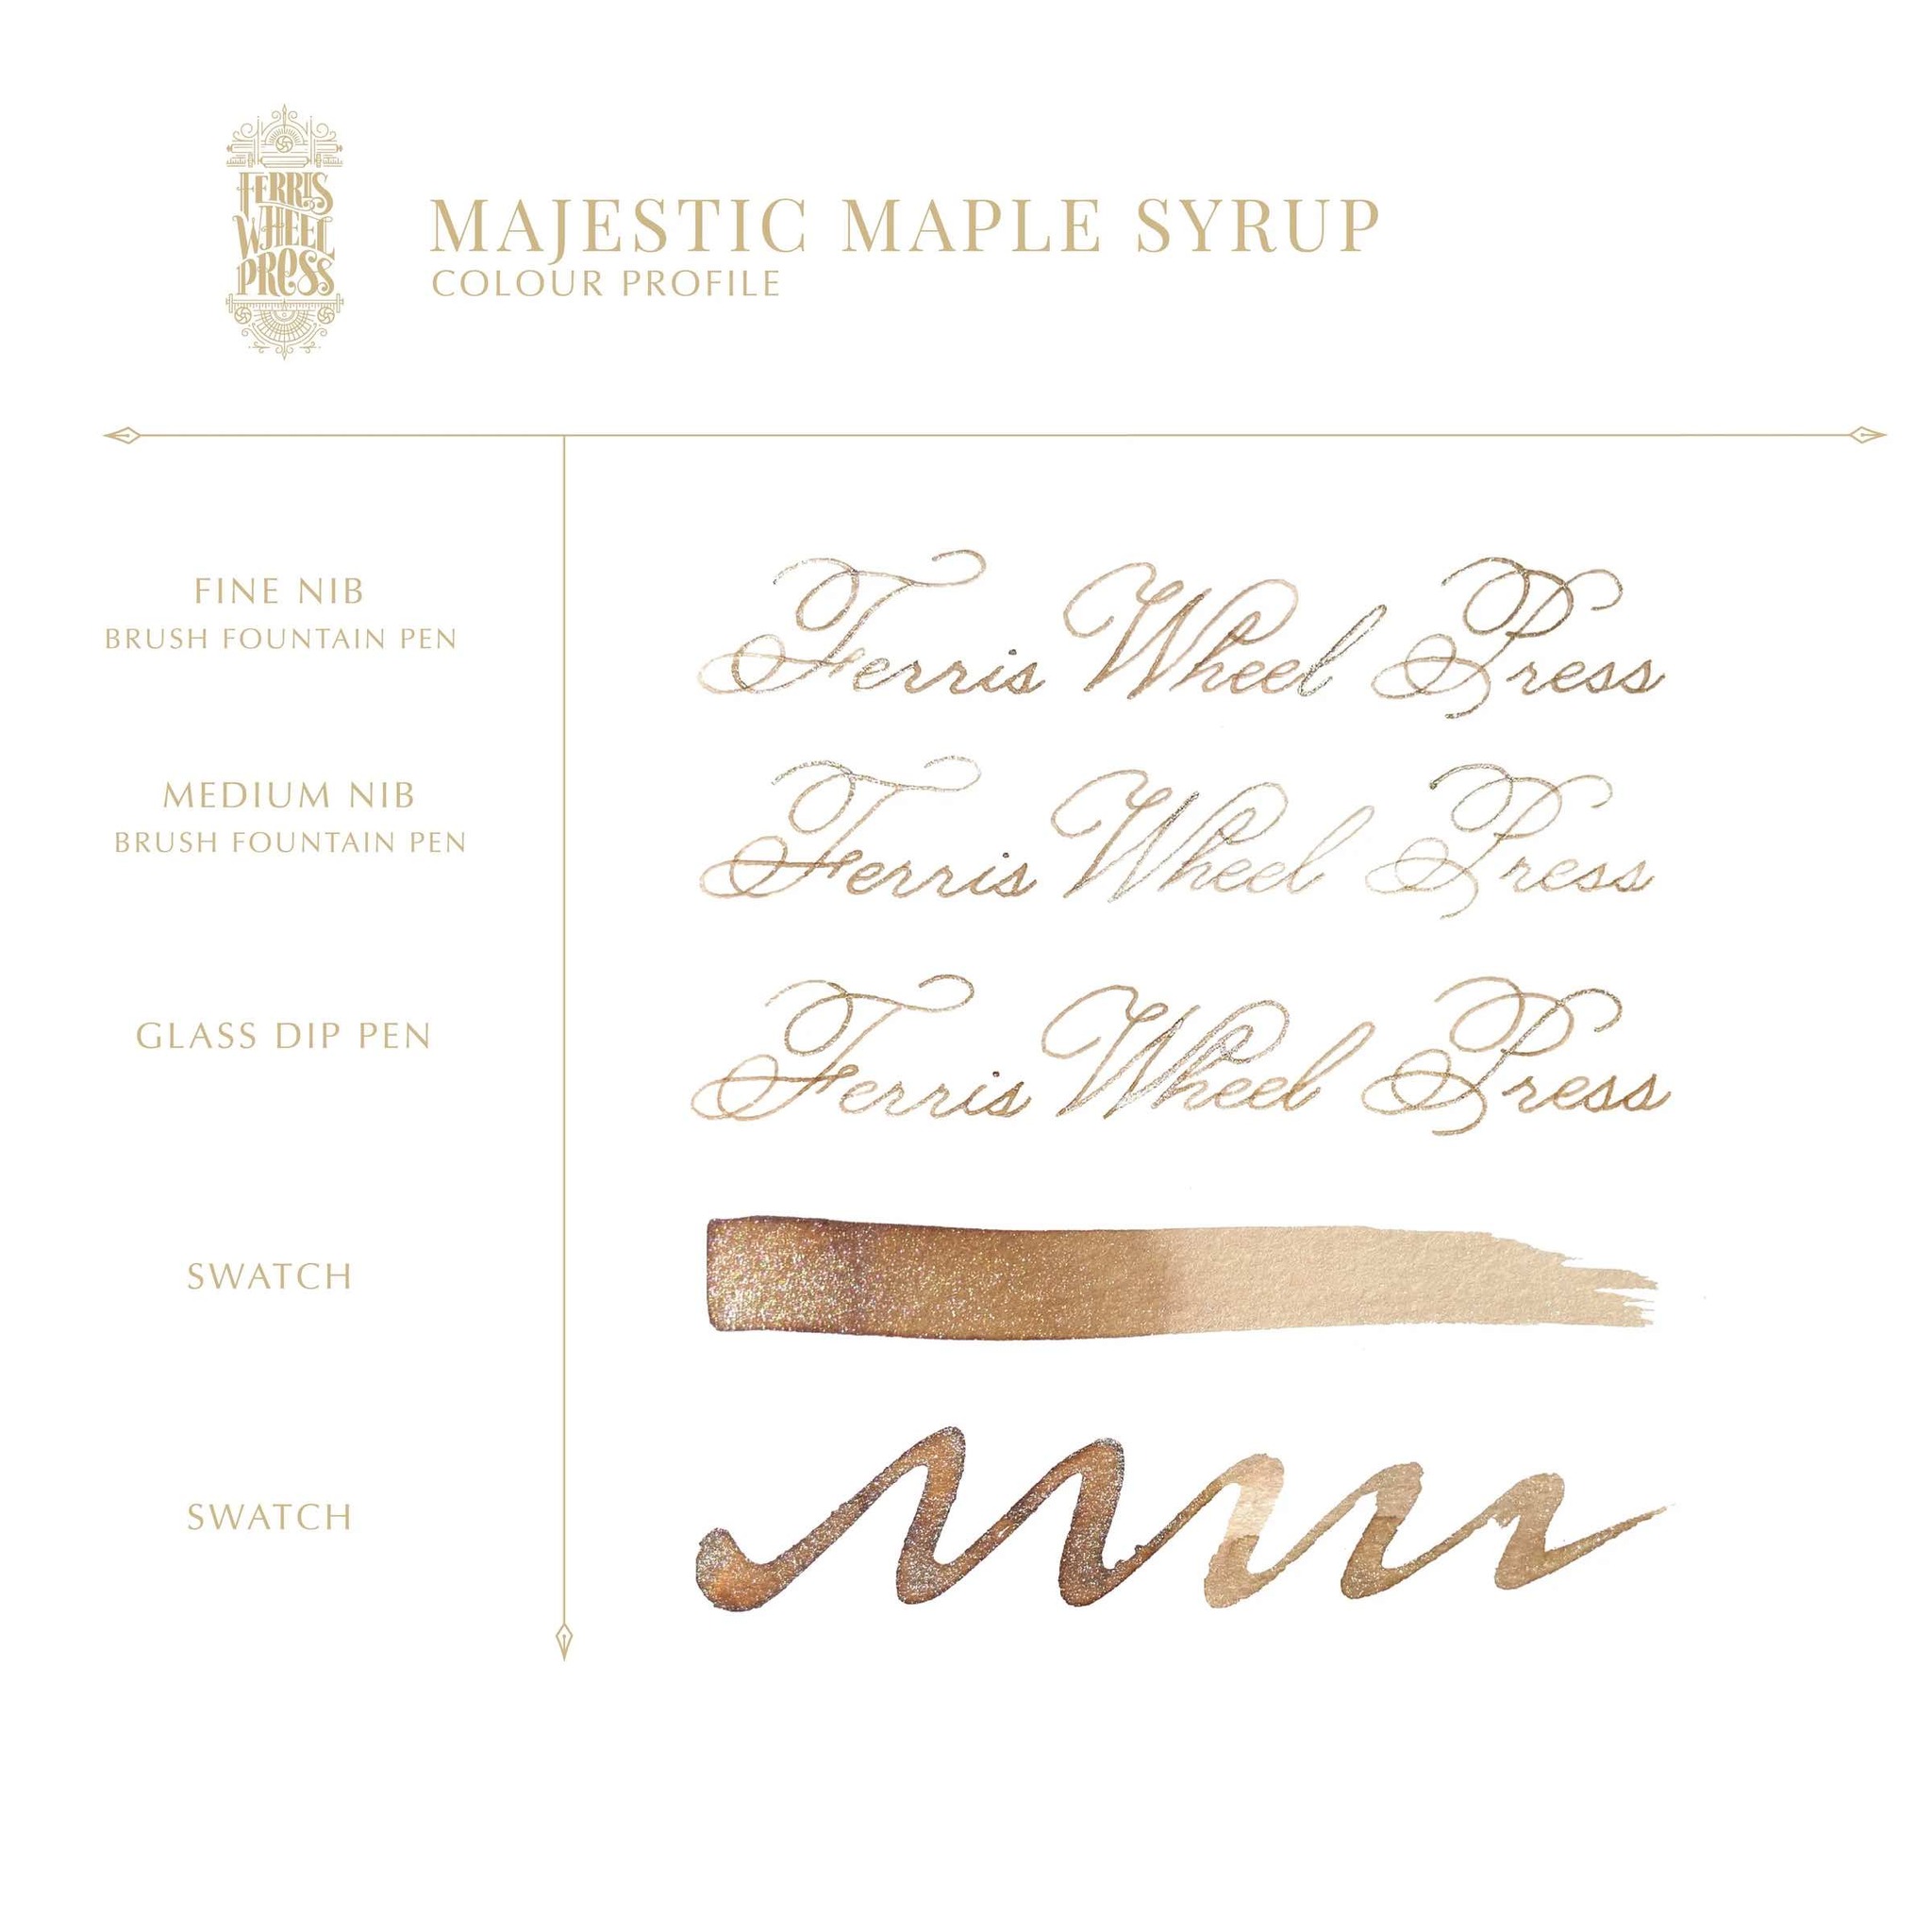 Ferris Wheel Press - Majestic Maple Syrup 38 ml